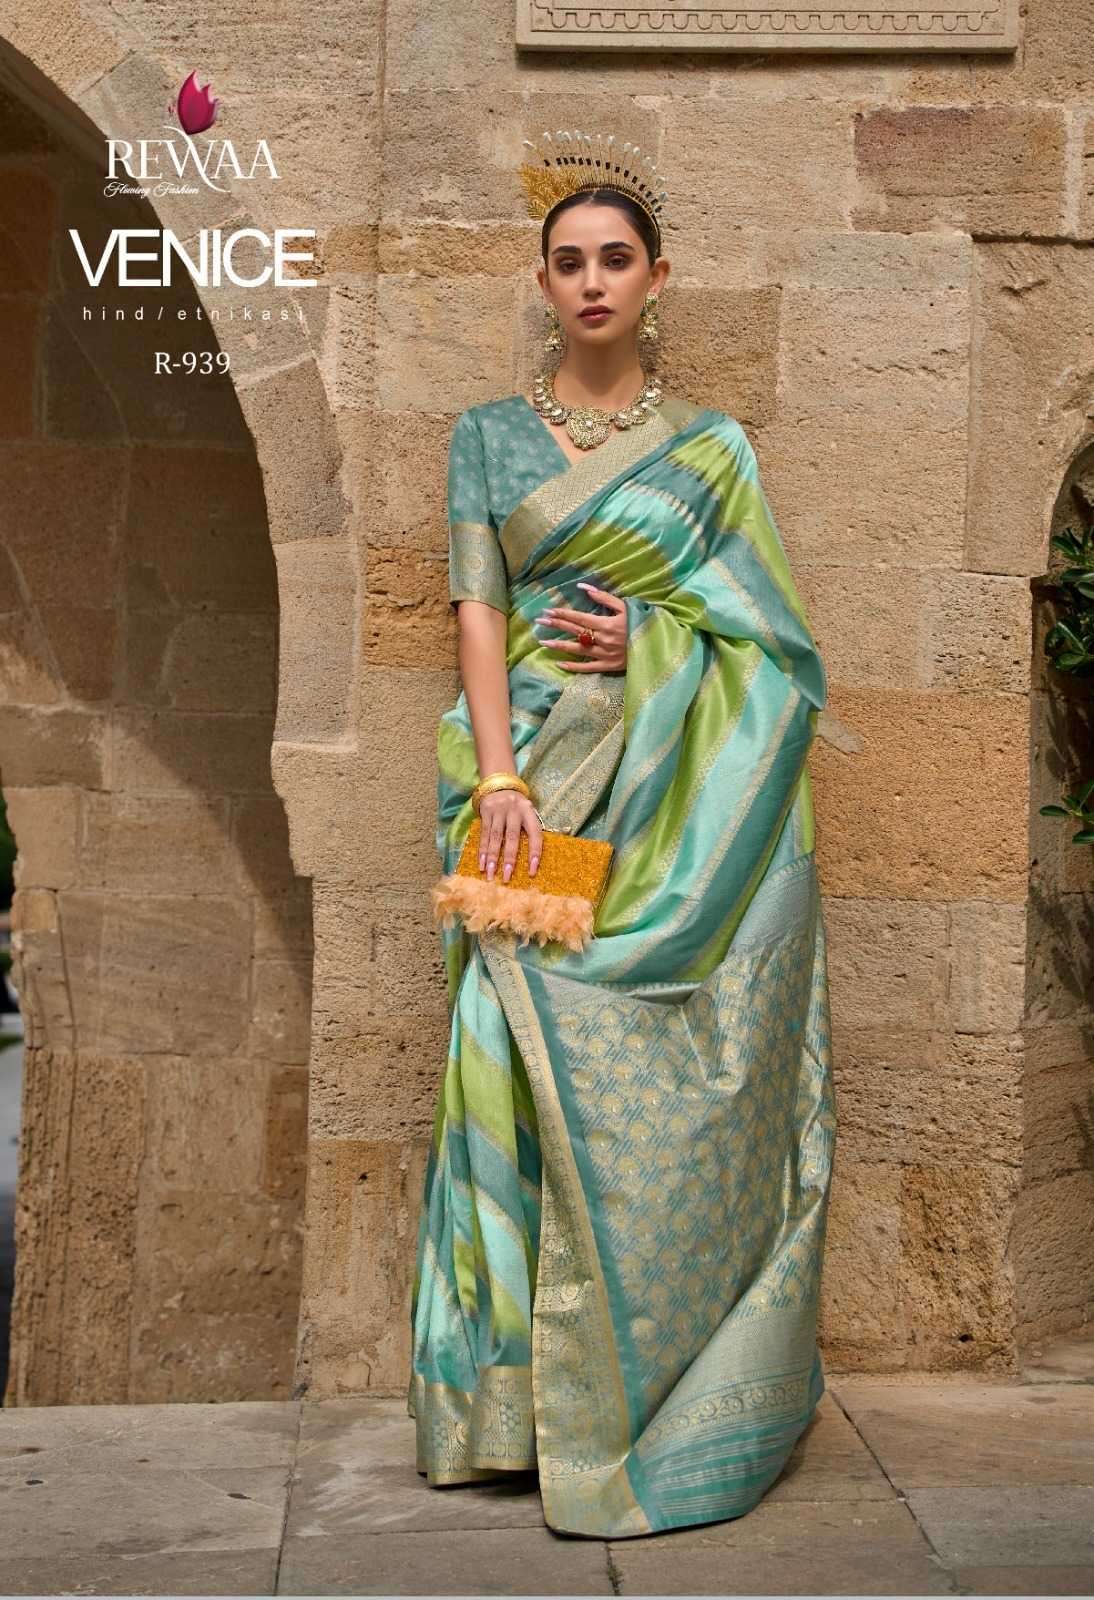 rewaa venice series 930-939 superior silk saree